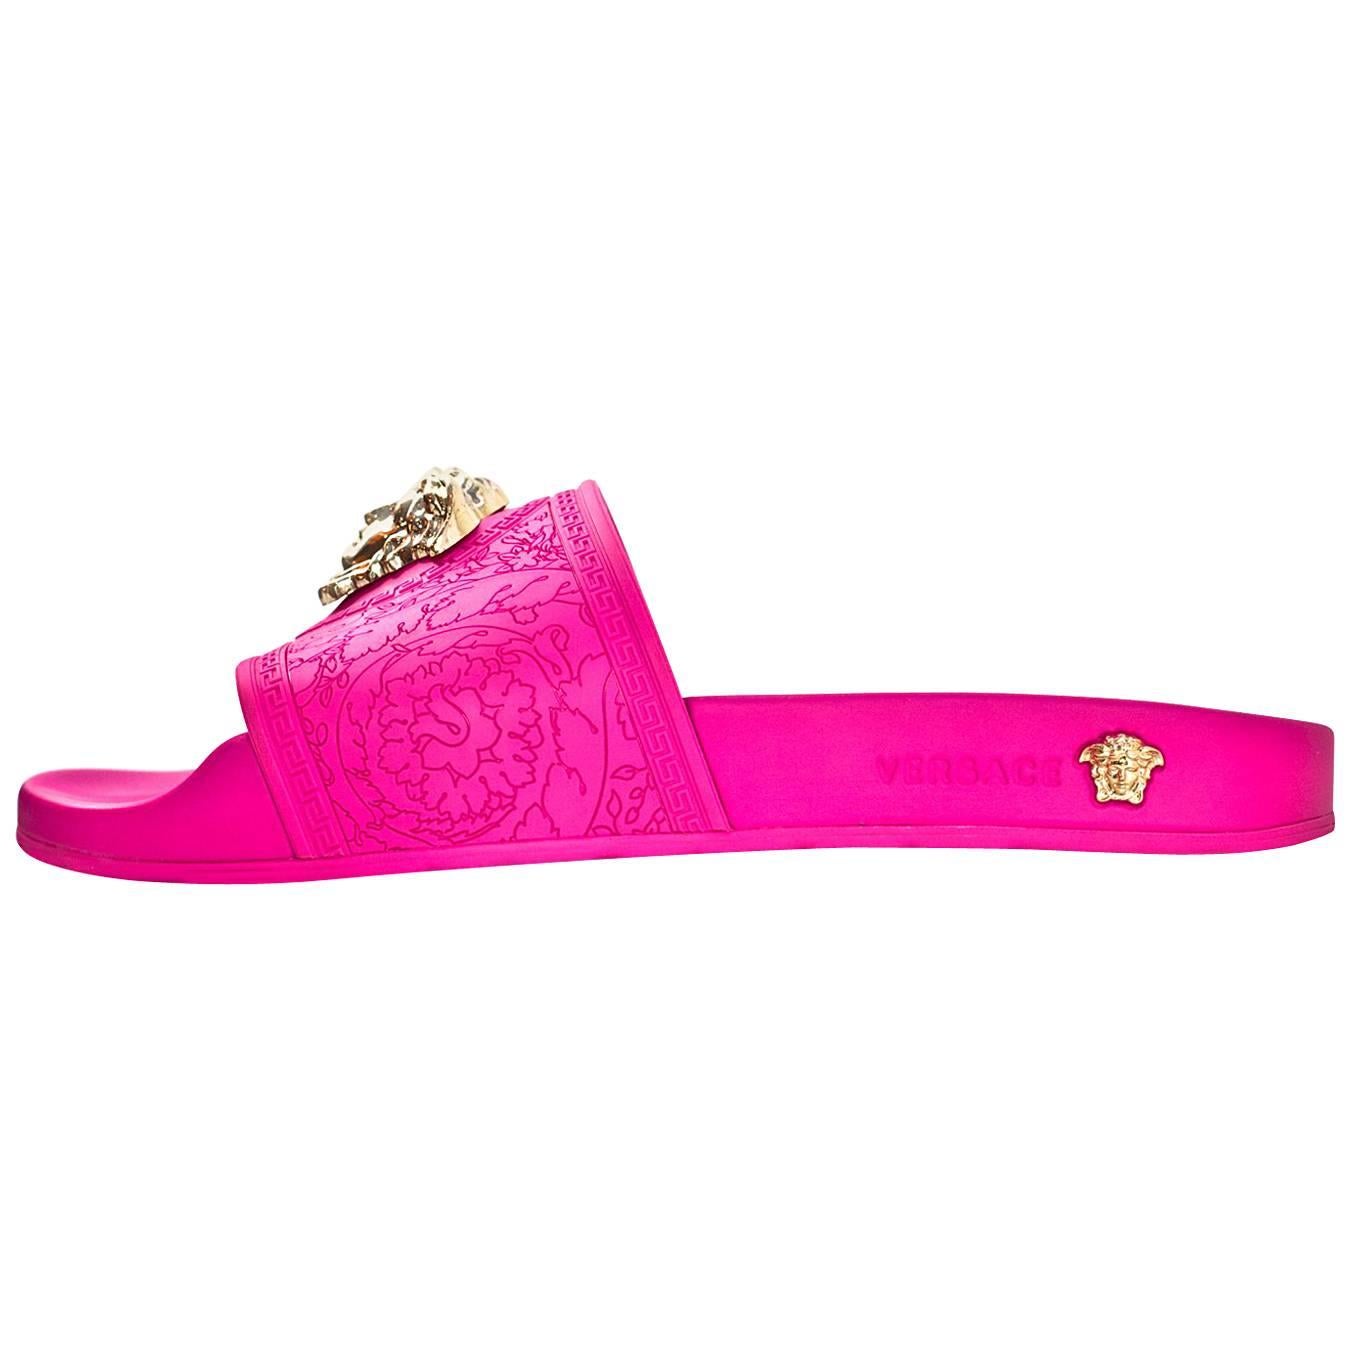 Versace Hot Pink Medusa Slide Sandals Sz 39 with Box